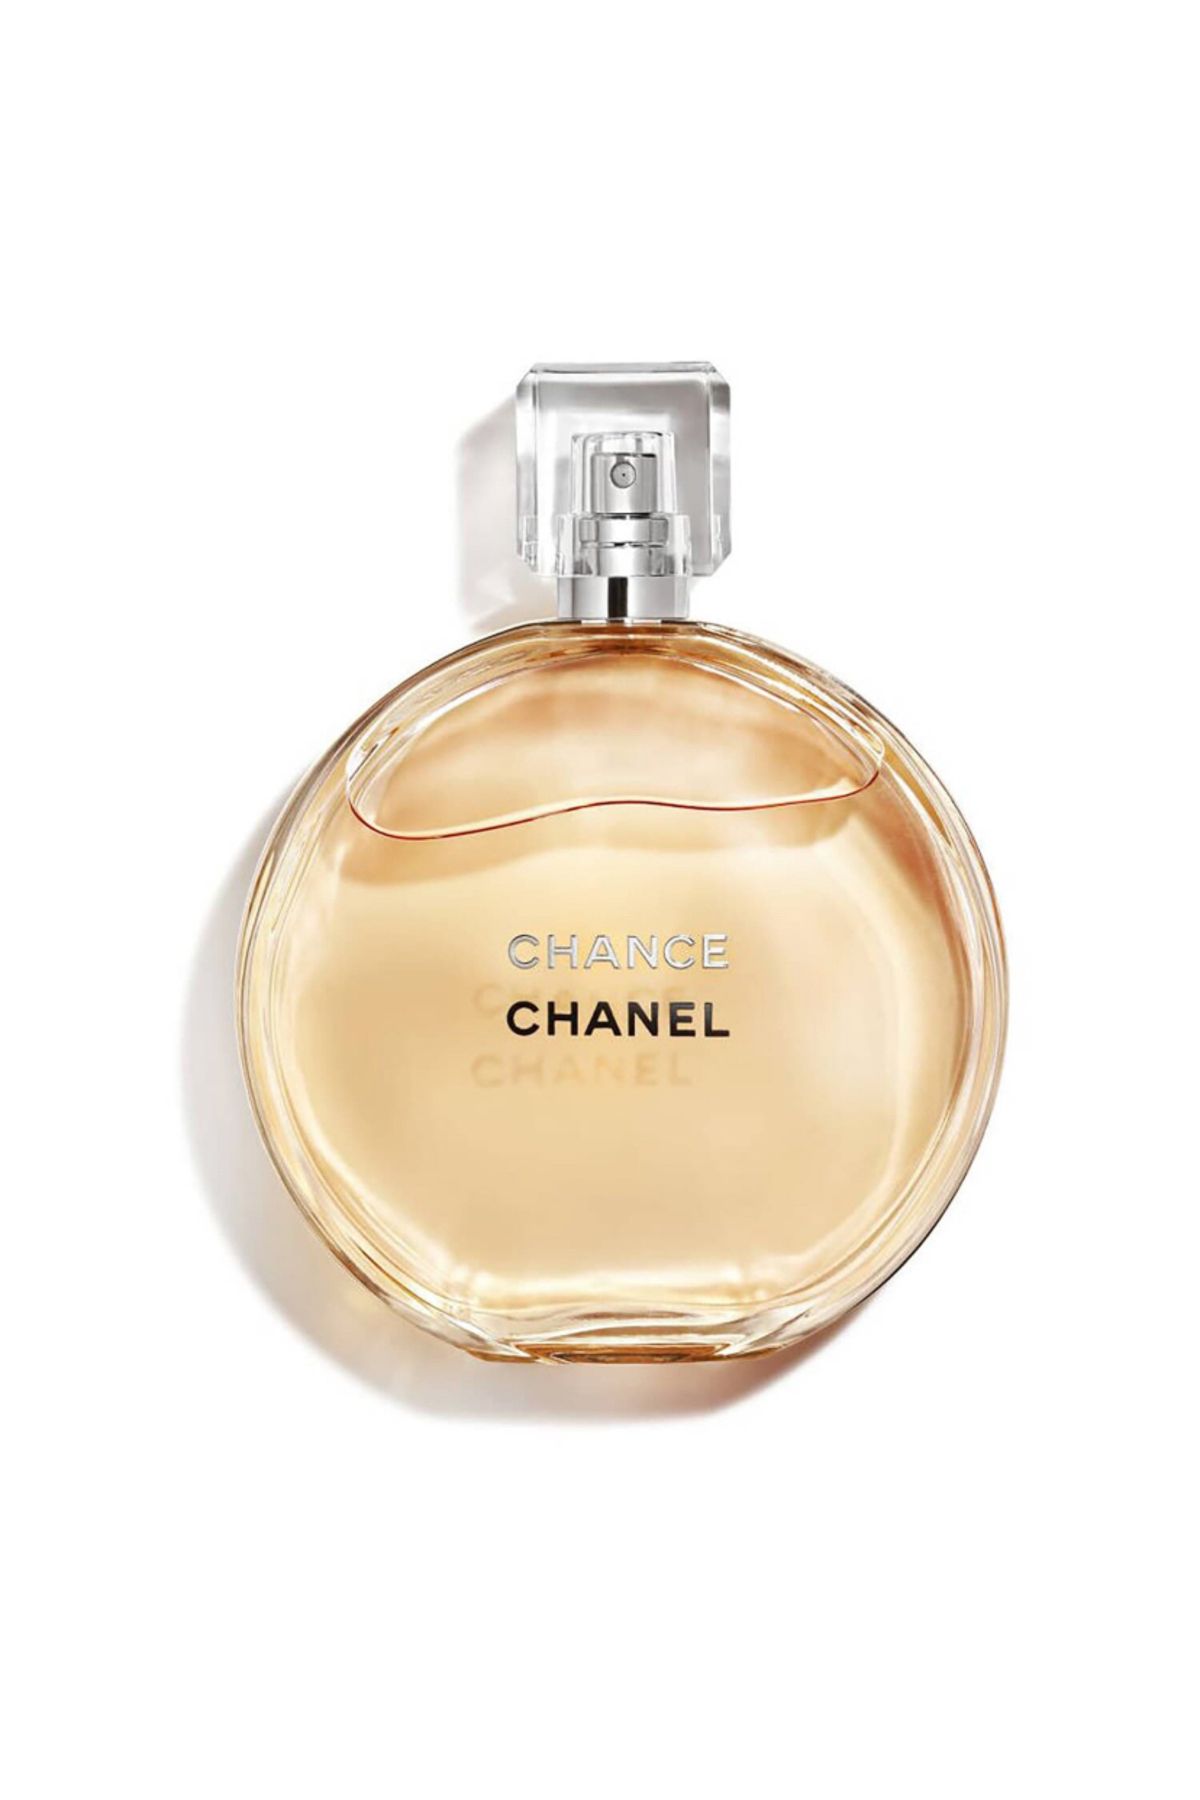 Chanel CHANCE EDT KADIN PARFUM 100ml Pinkestcosmetics